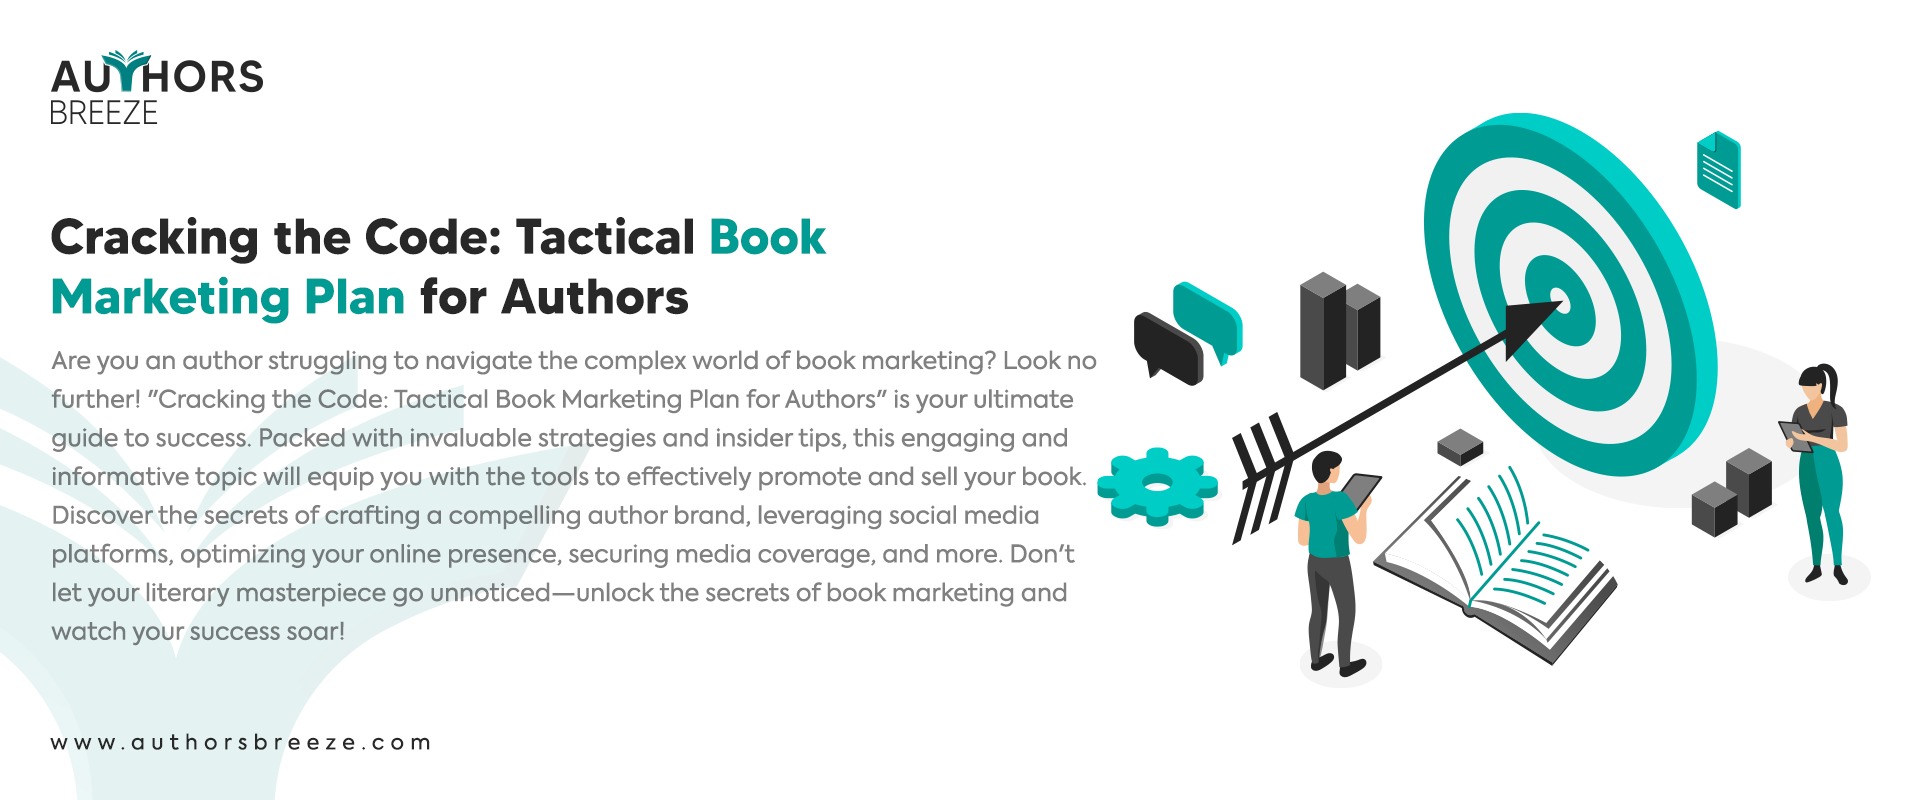 Authors breeze-Book Marketing Plan